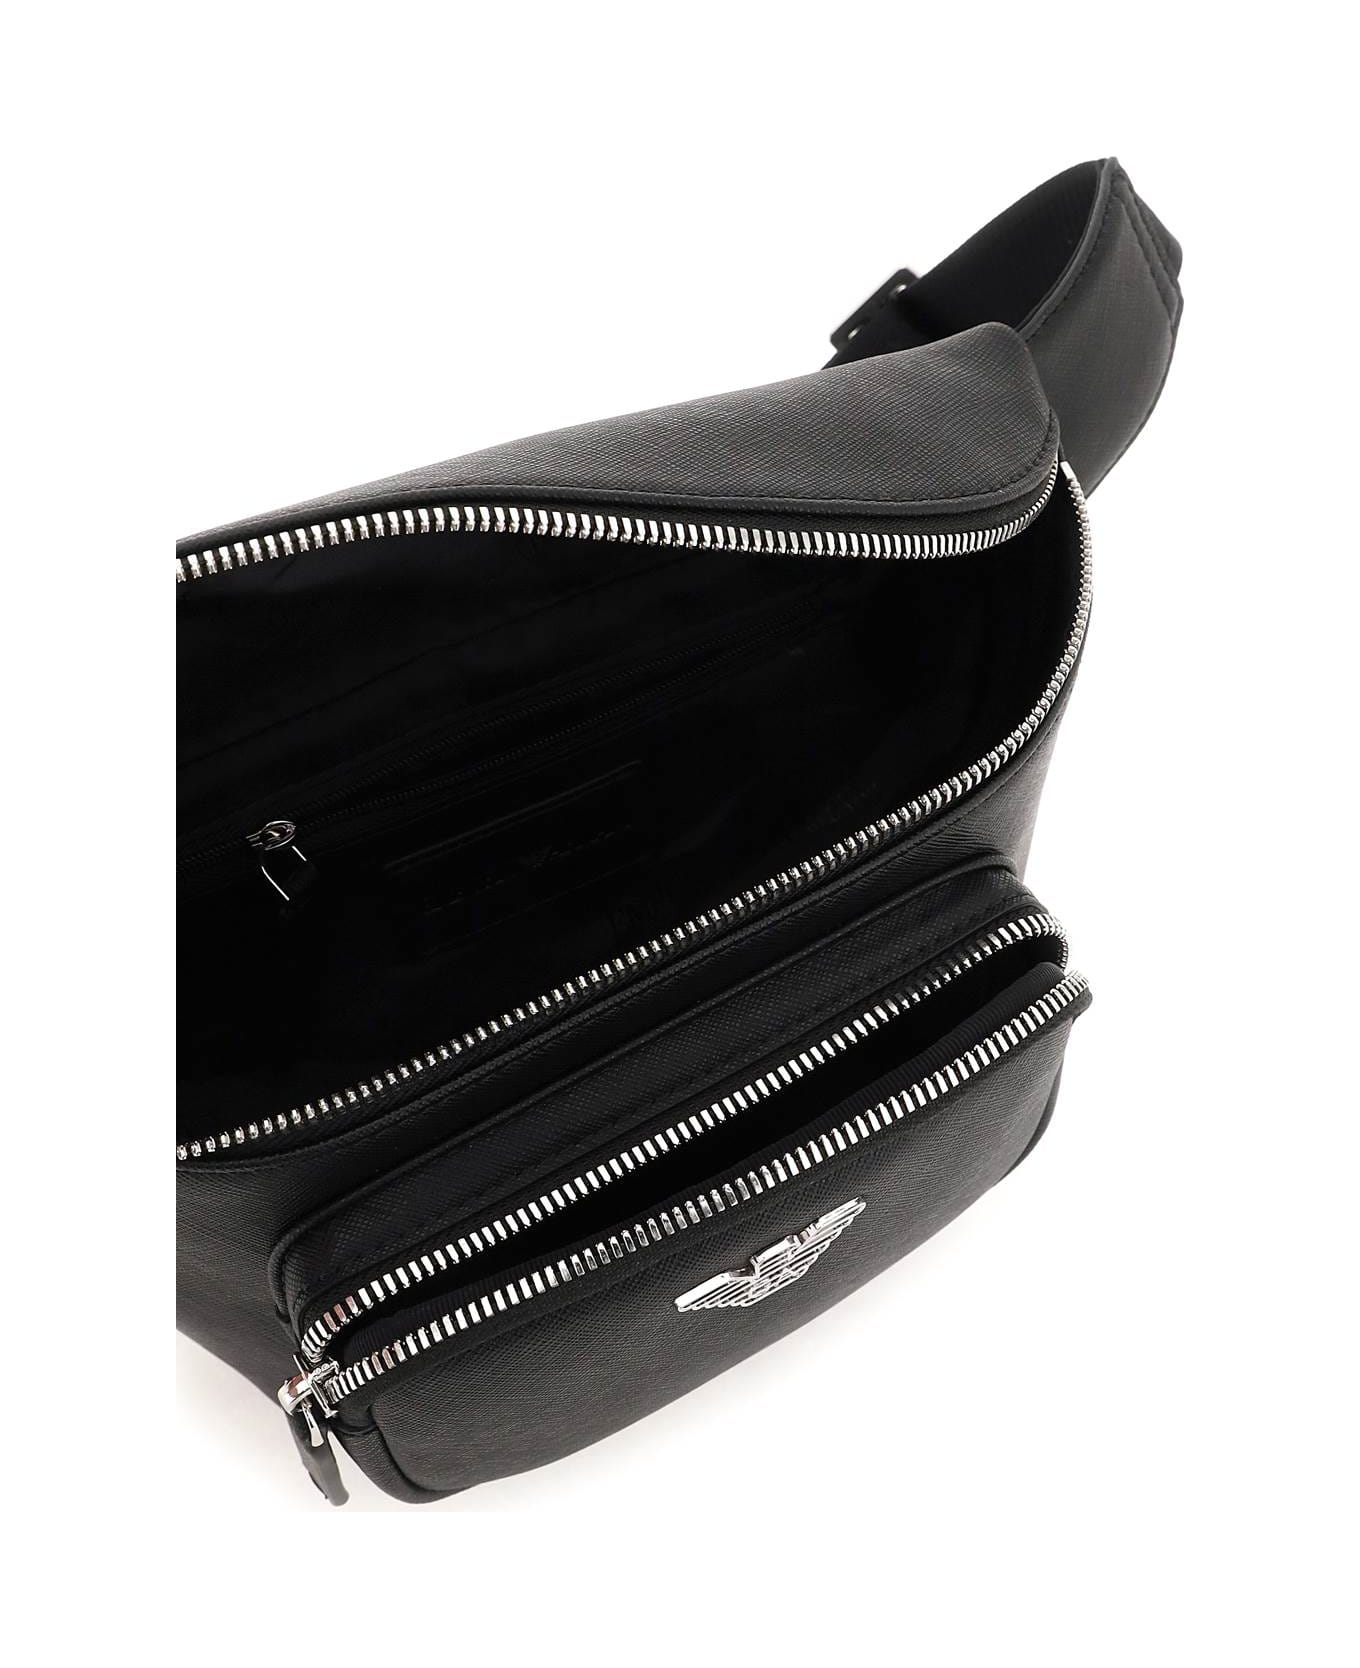 Emporio Armani Regenerated Leather Beltpack - BLACK (Black)